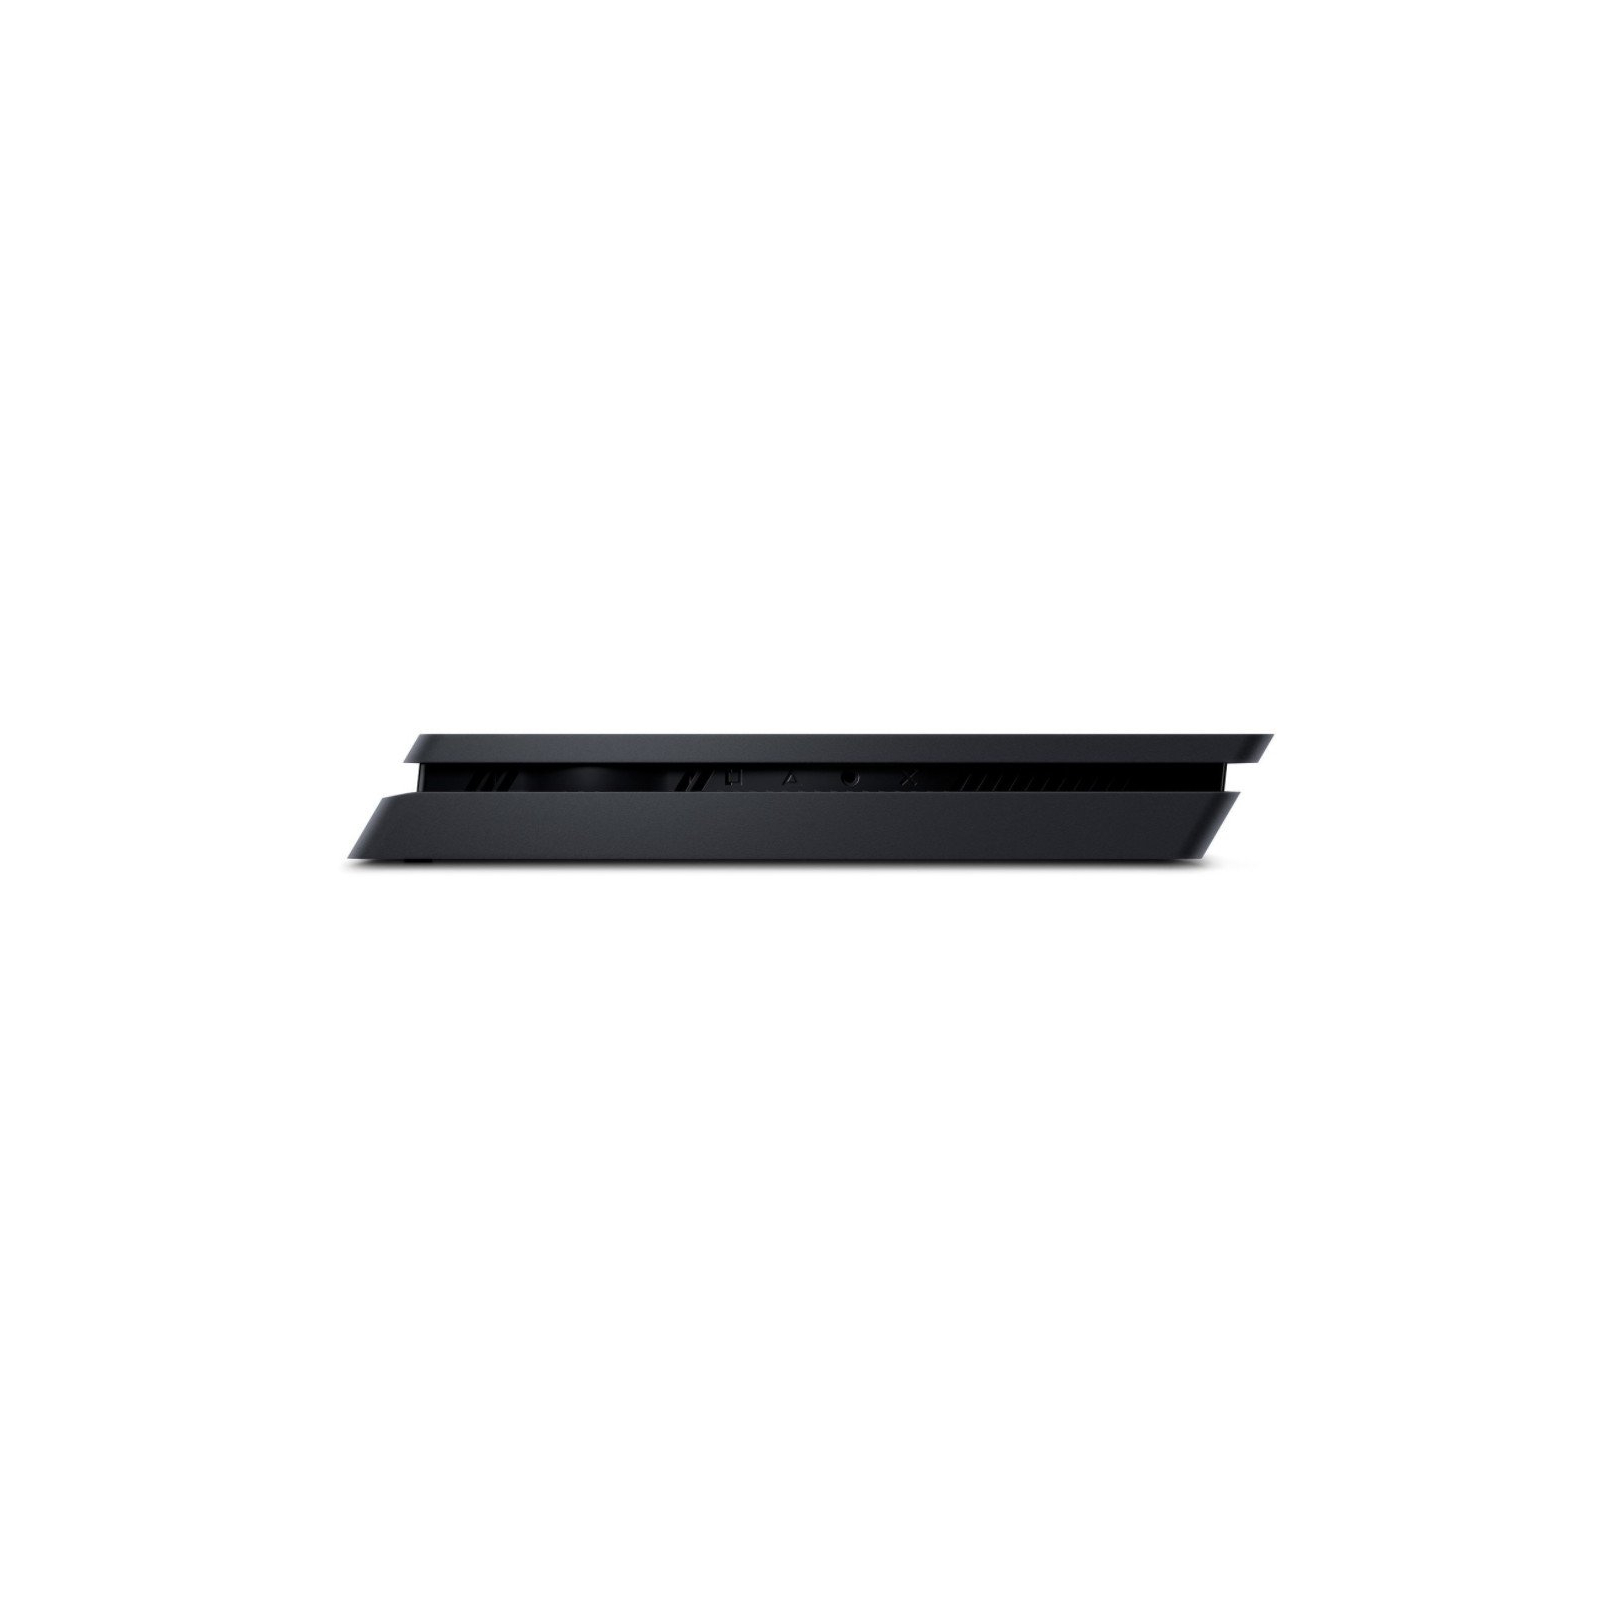 Ігрова консоль Sony PlayStation 4 Slim 1Tb Black (FIFA 18/DS4/ PS+14Day) (9915966) зображення 4